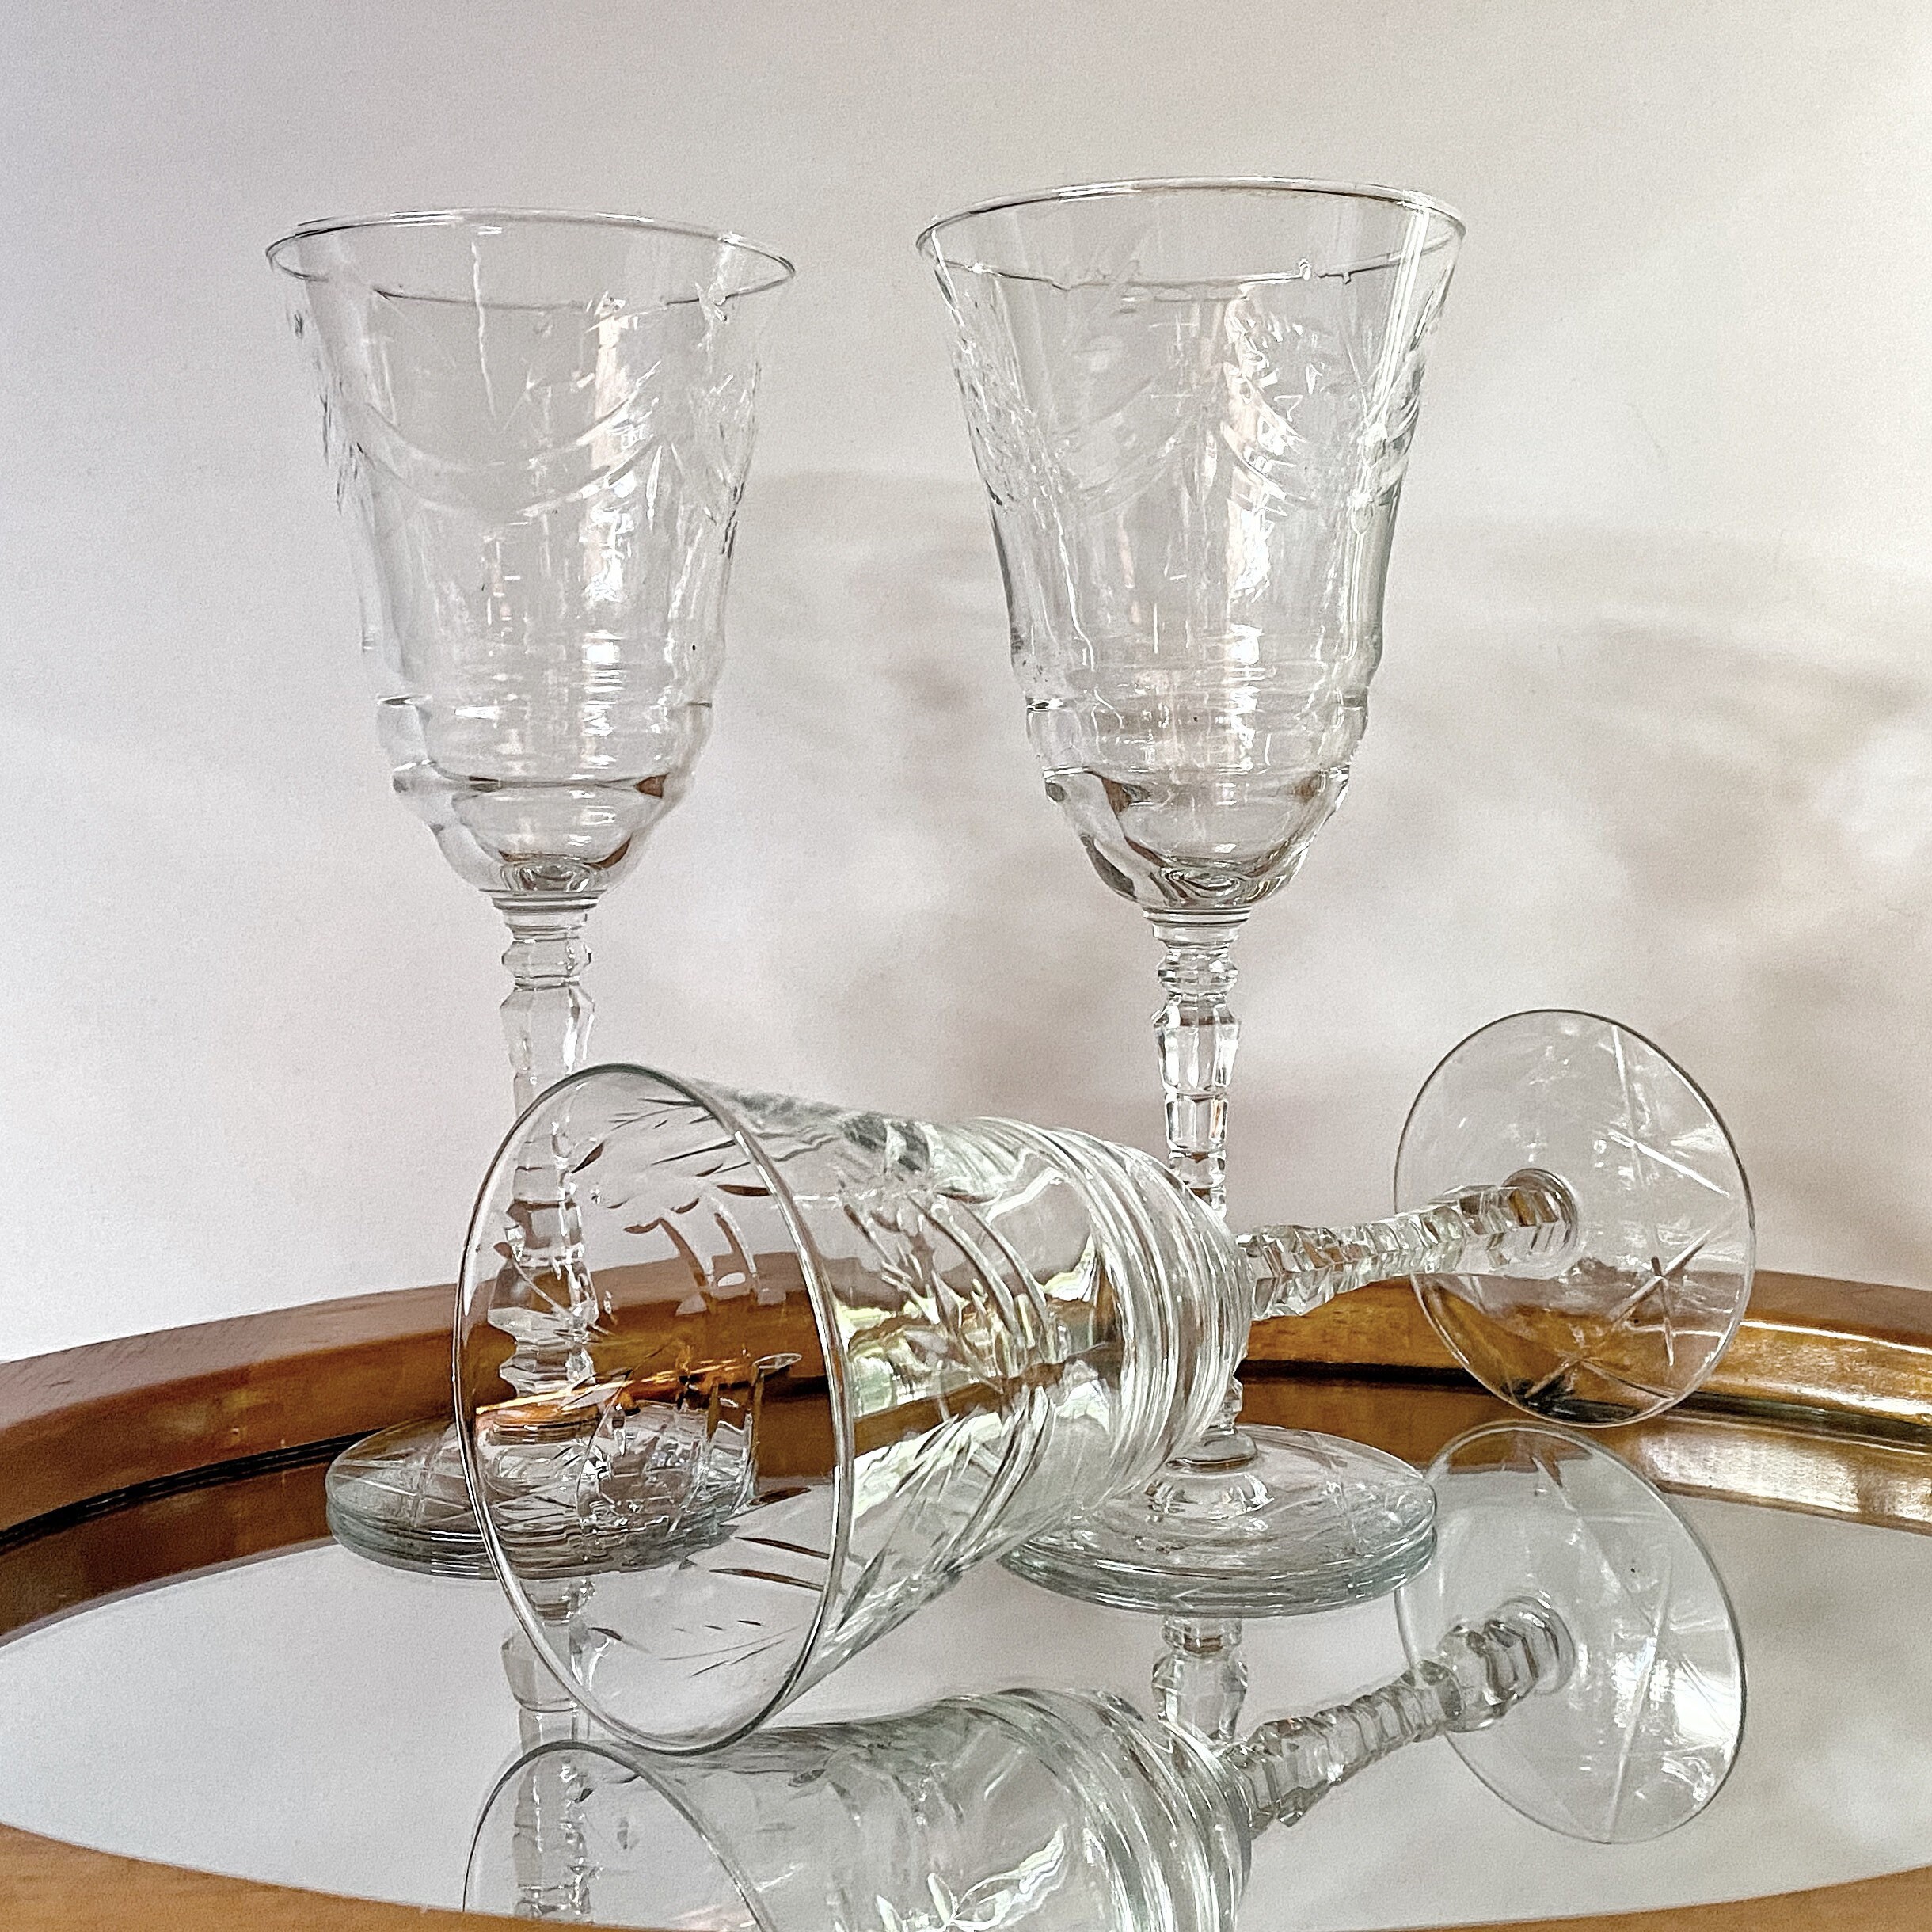 4 Vintage Etched Wine Glasses, Rock Sharpe, circa 1950's, Antique Etched Wine  Glasses ~ Water Goblets, Vintage Wedding Wine Glasses